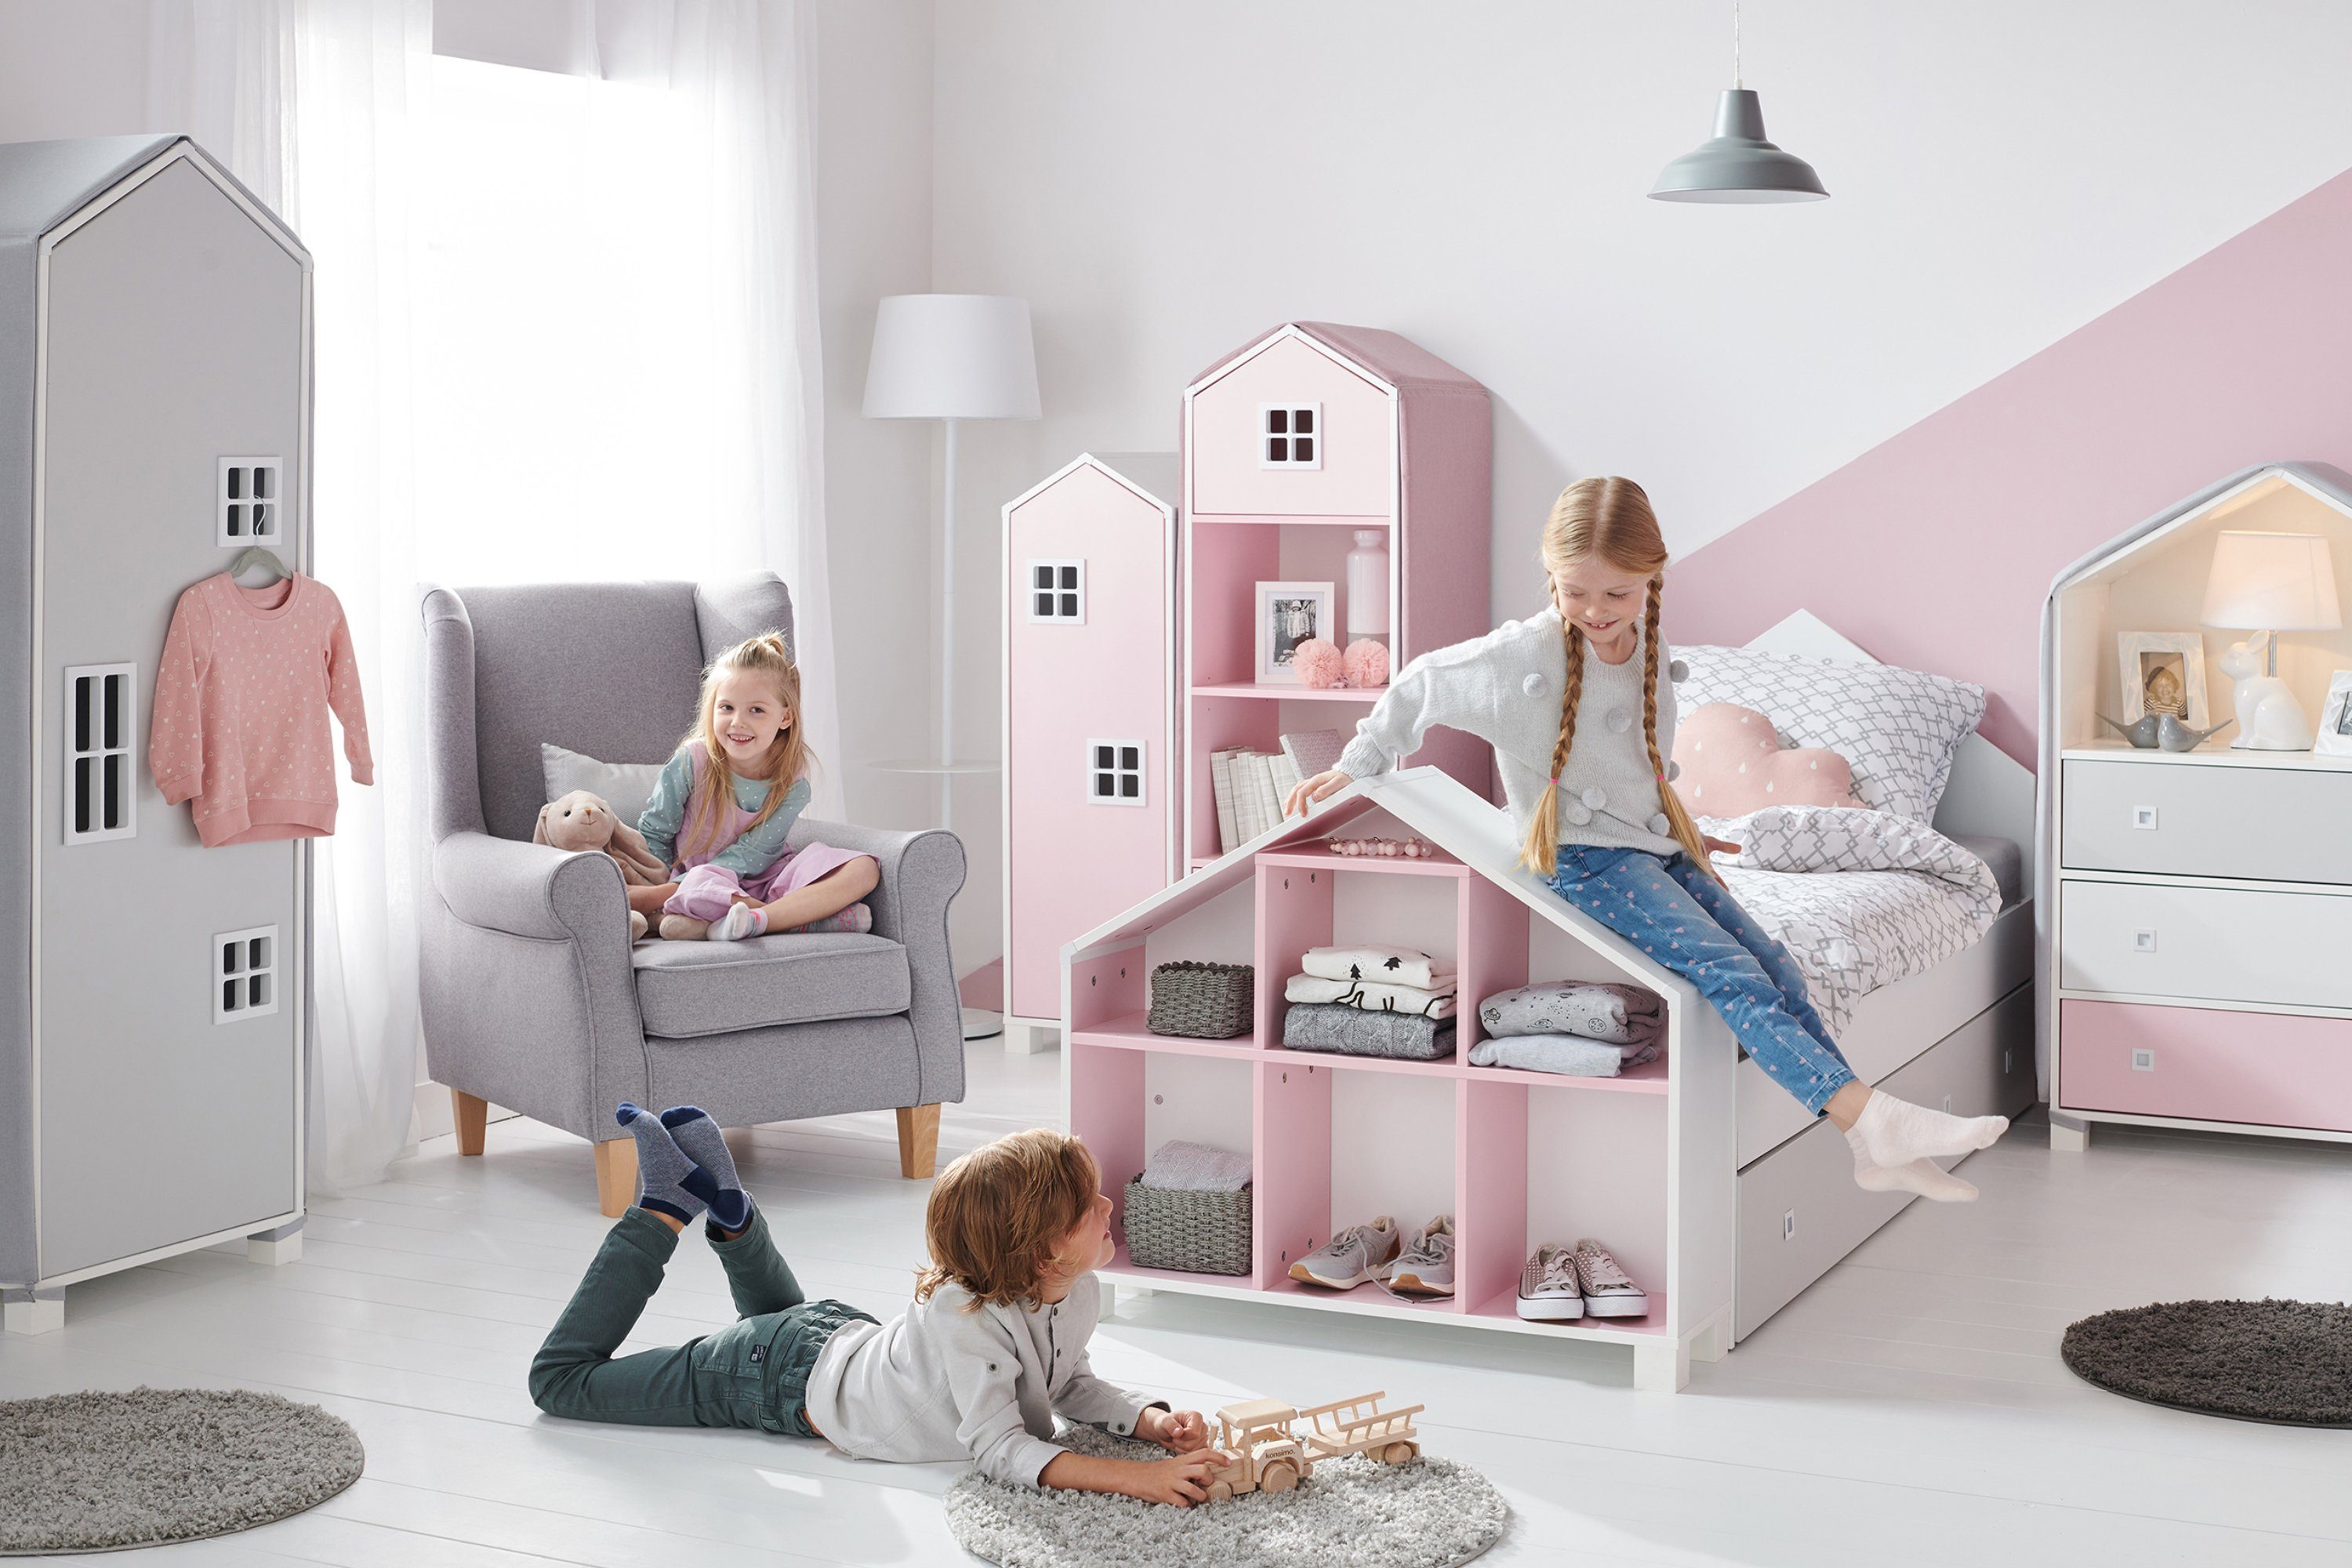 Hausform / 2x Babyzimmer-Komplettset MIRUM Möbel Konsimo Kommode, Kindermöbel-Set Bücherregal / grau weiß Kinderkomplettzimmer, rosa